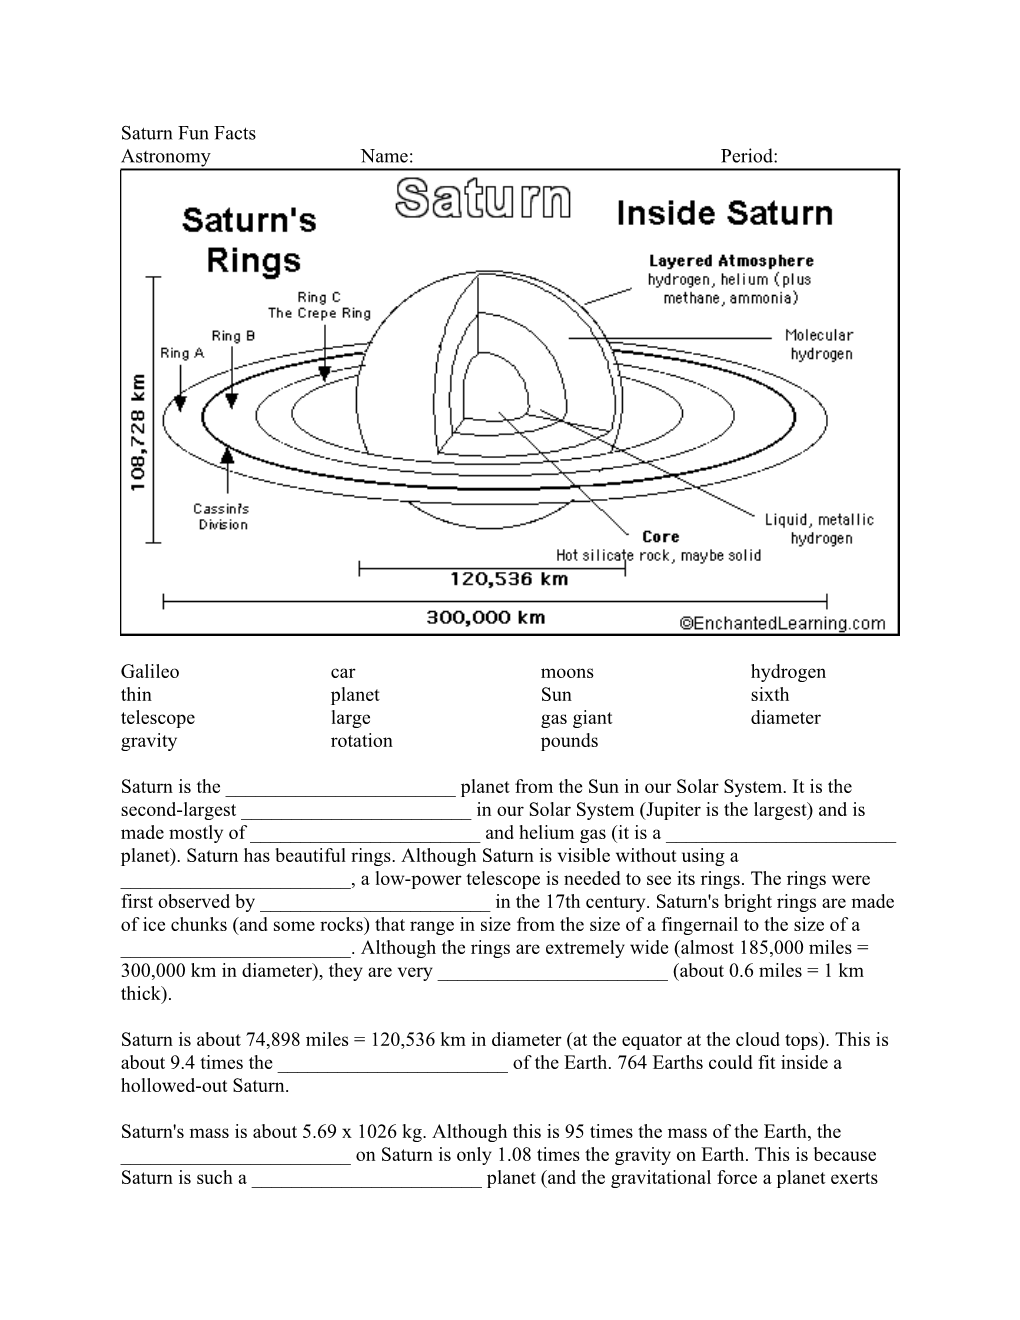 Saturn Fun Facts